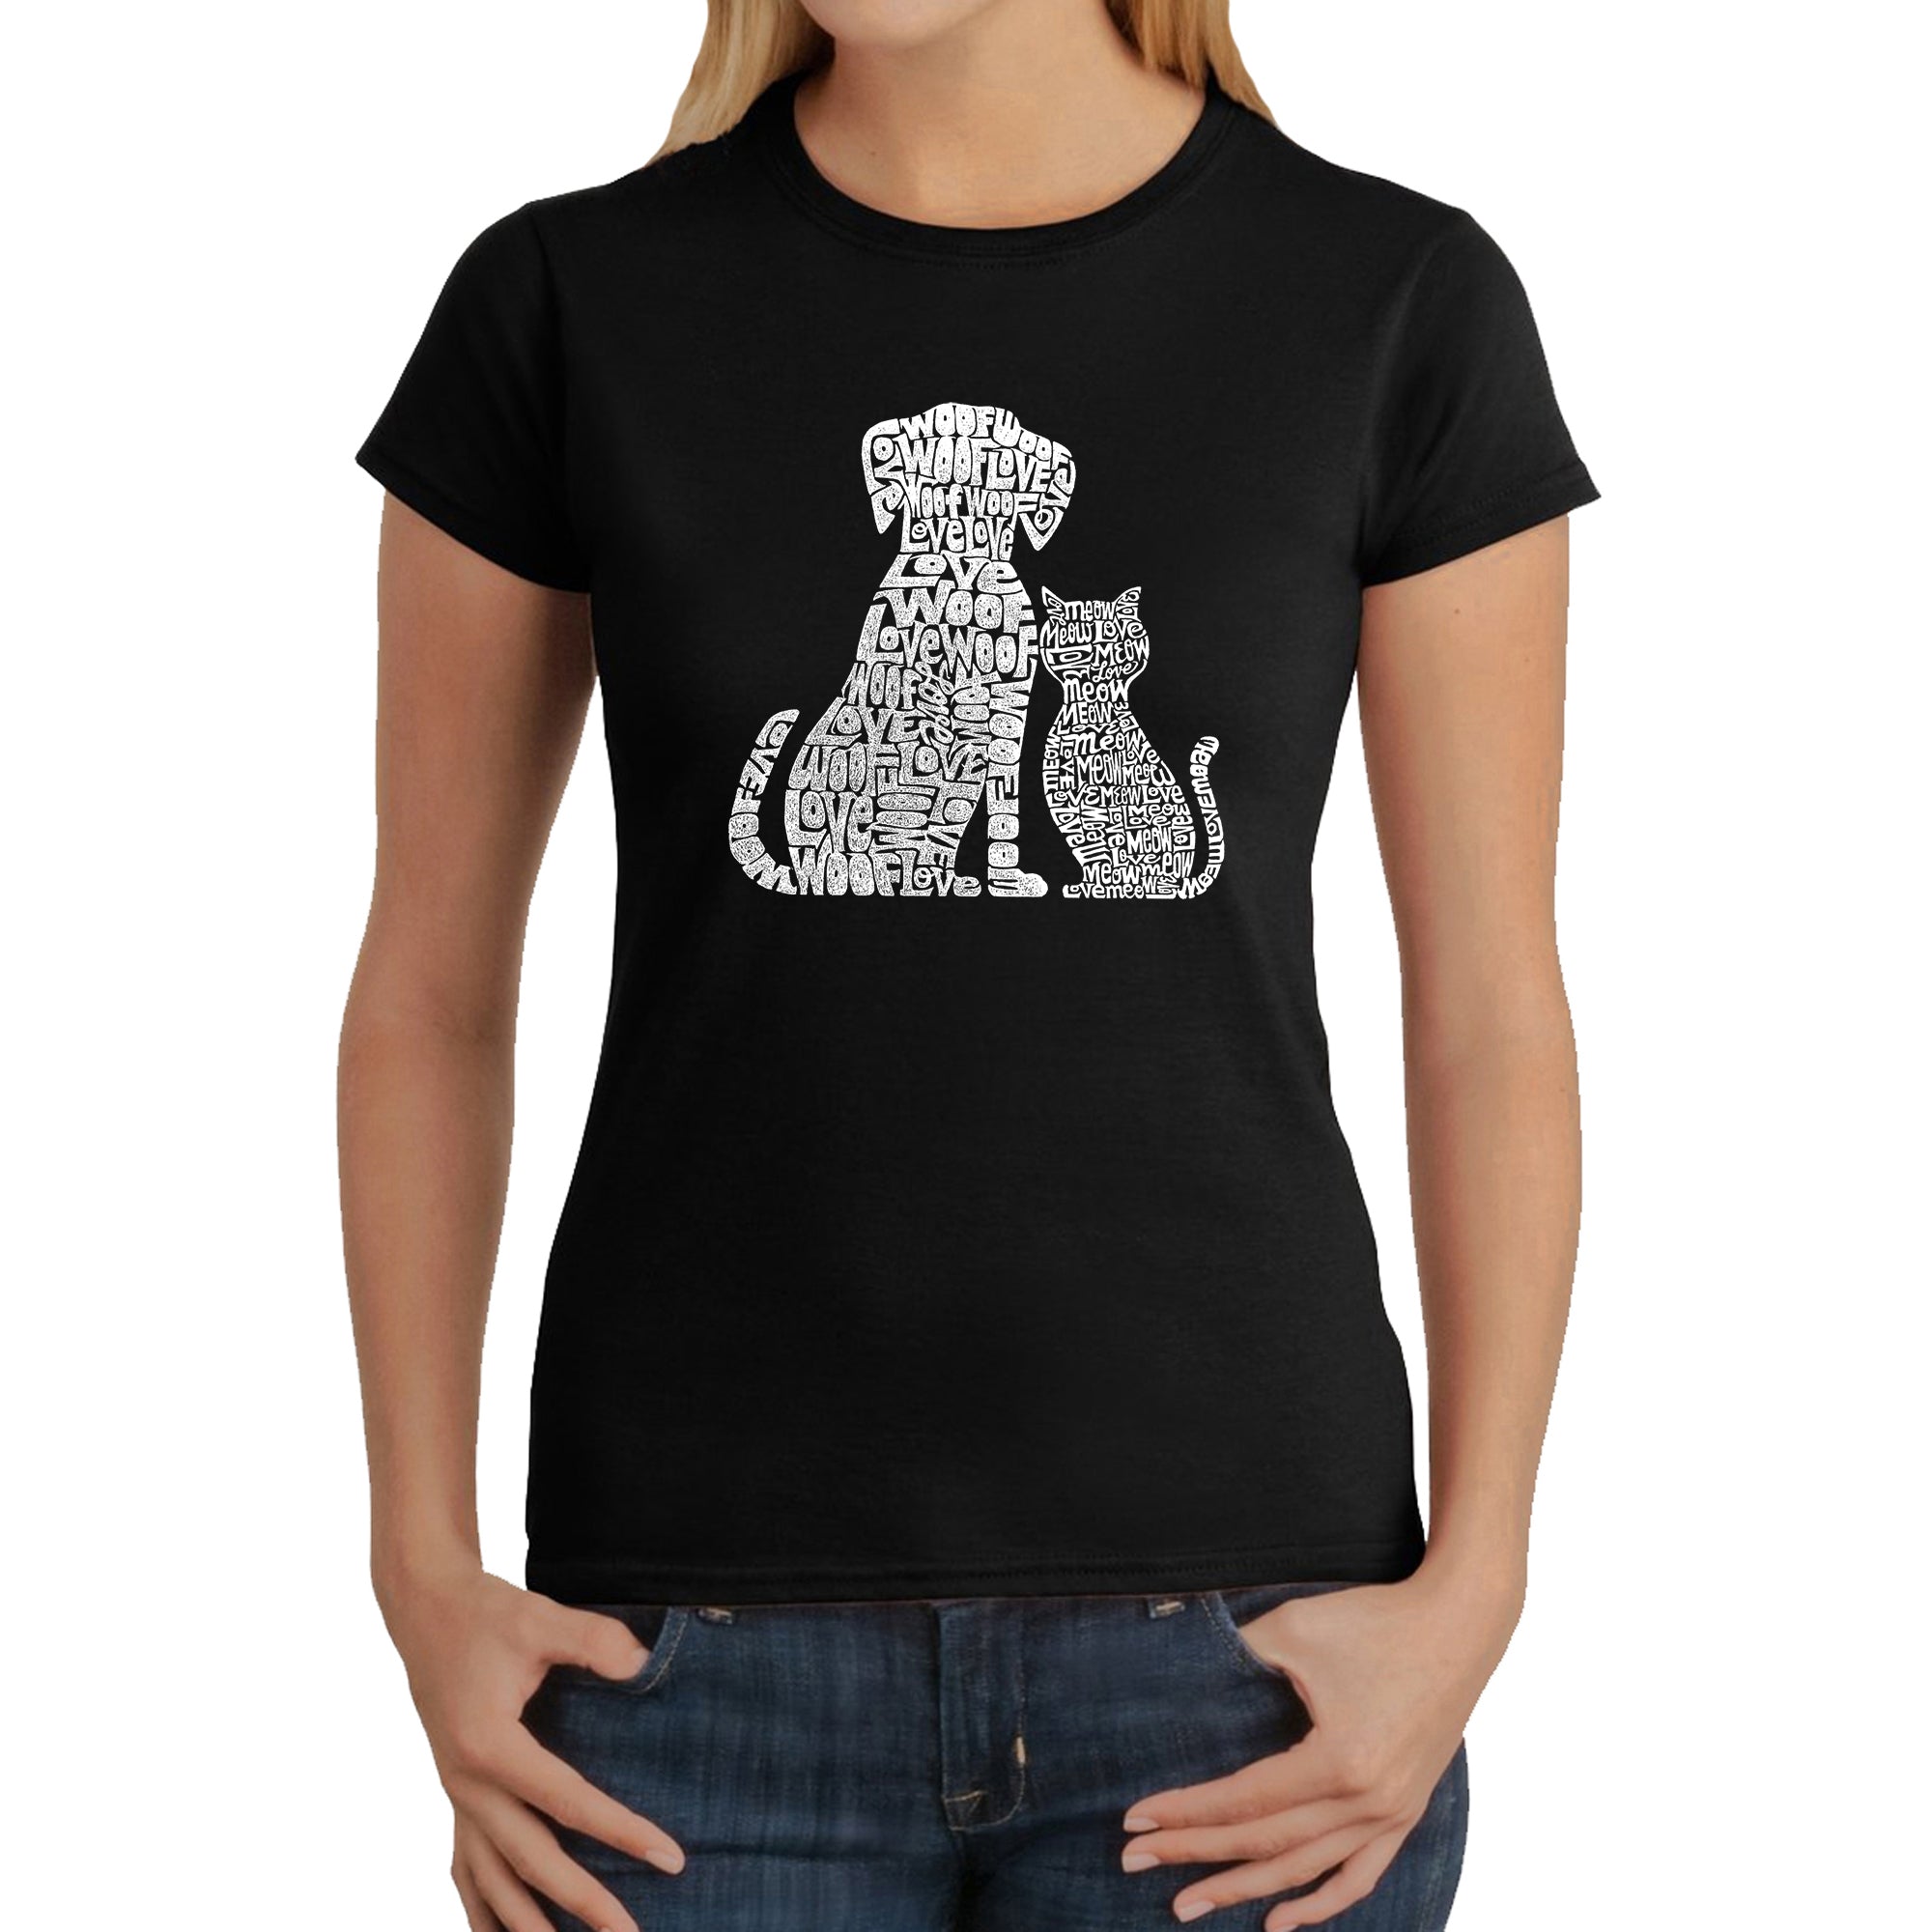 Dogs And Cats - Women's Word Art T-Shirt - Black - Medium